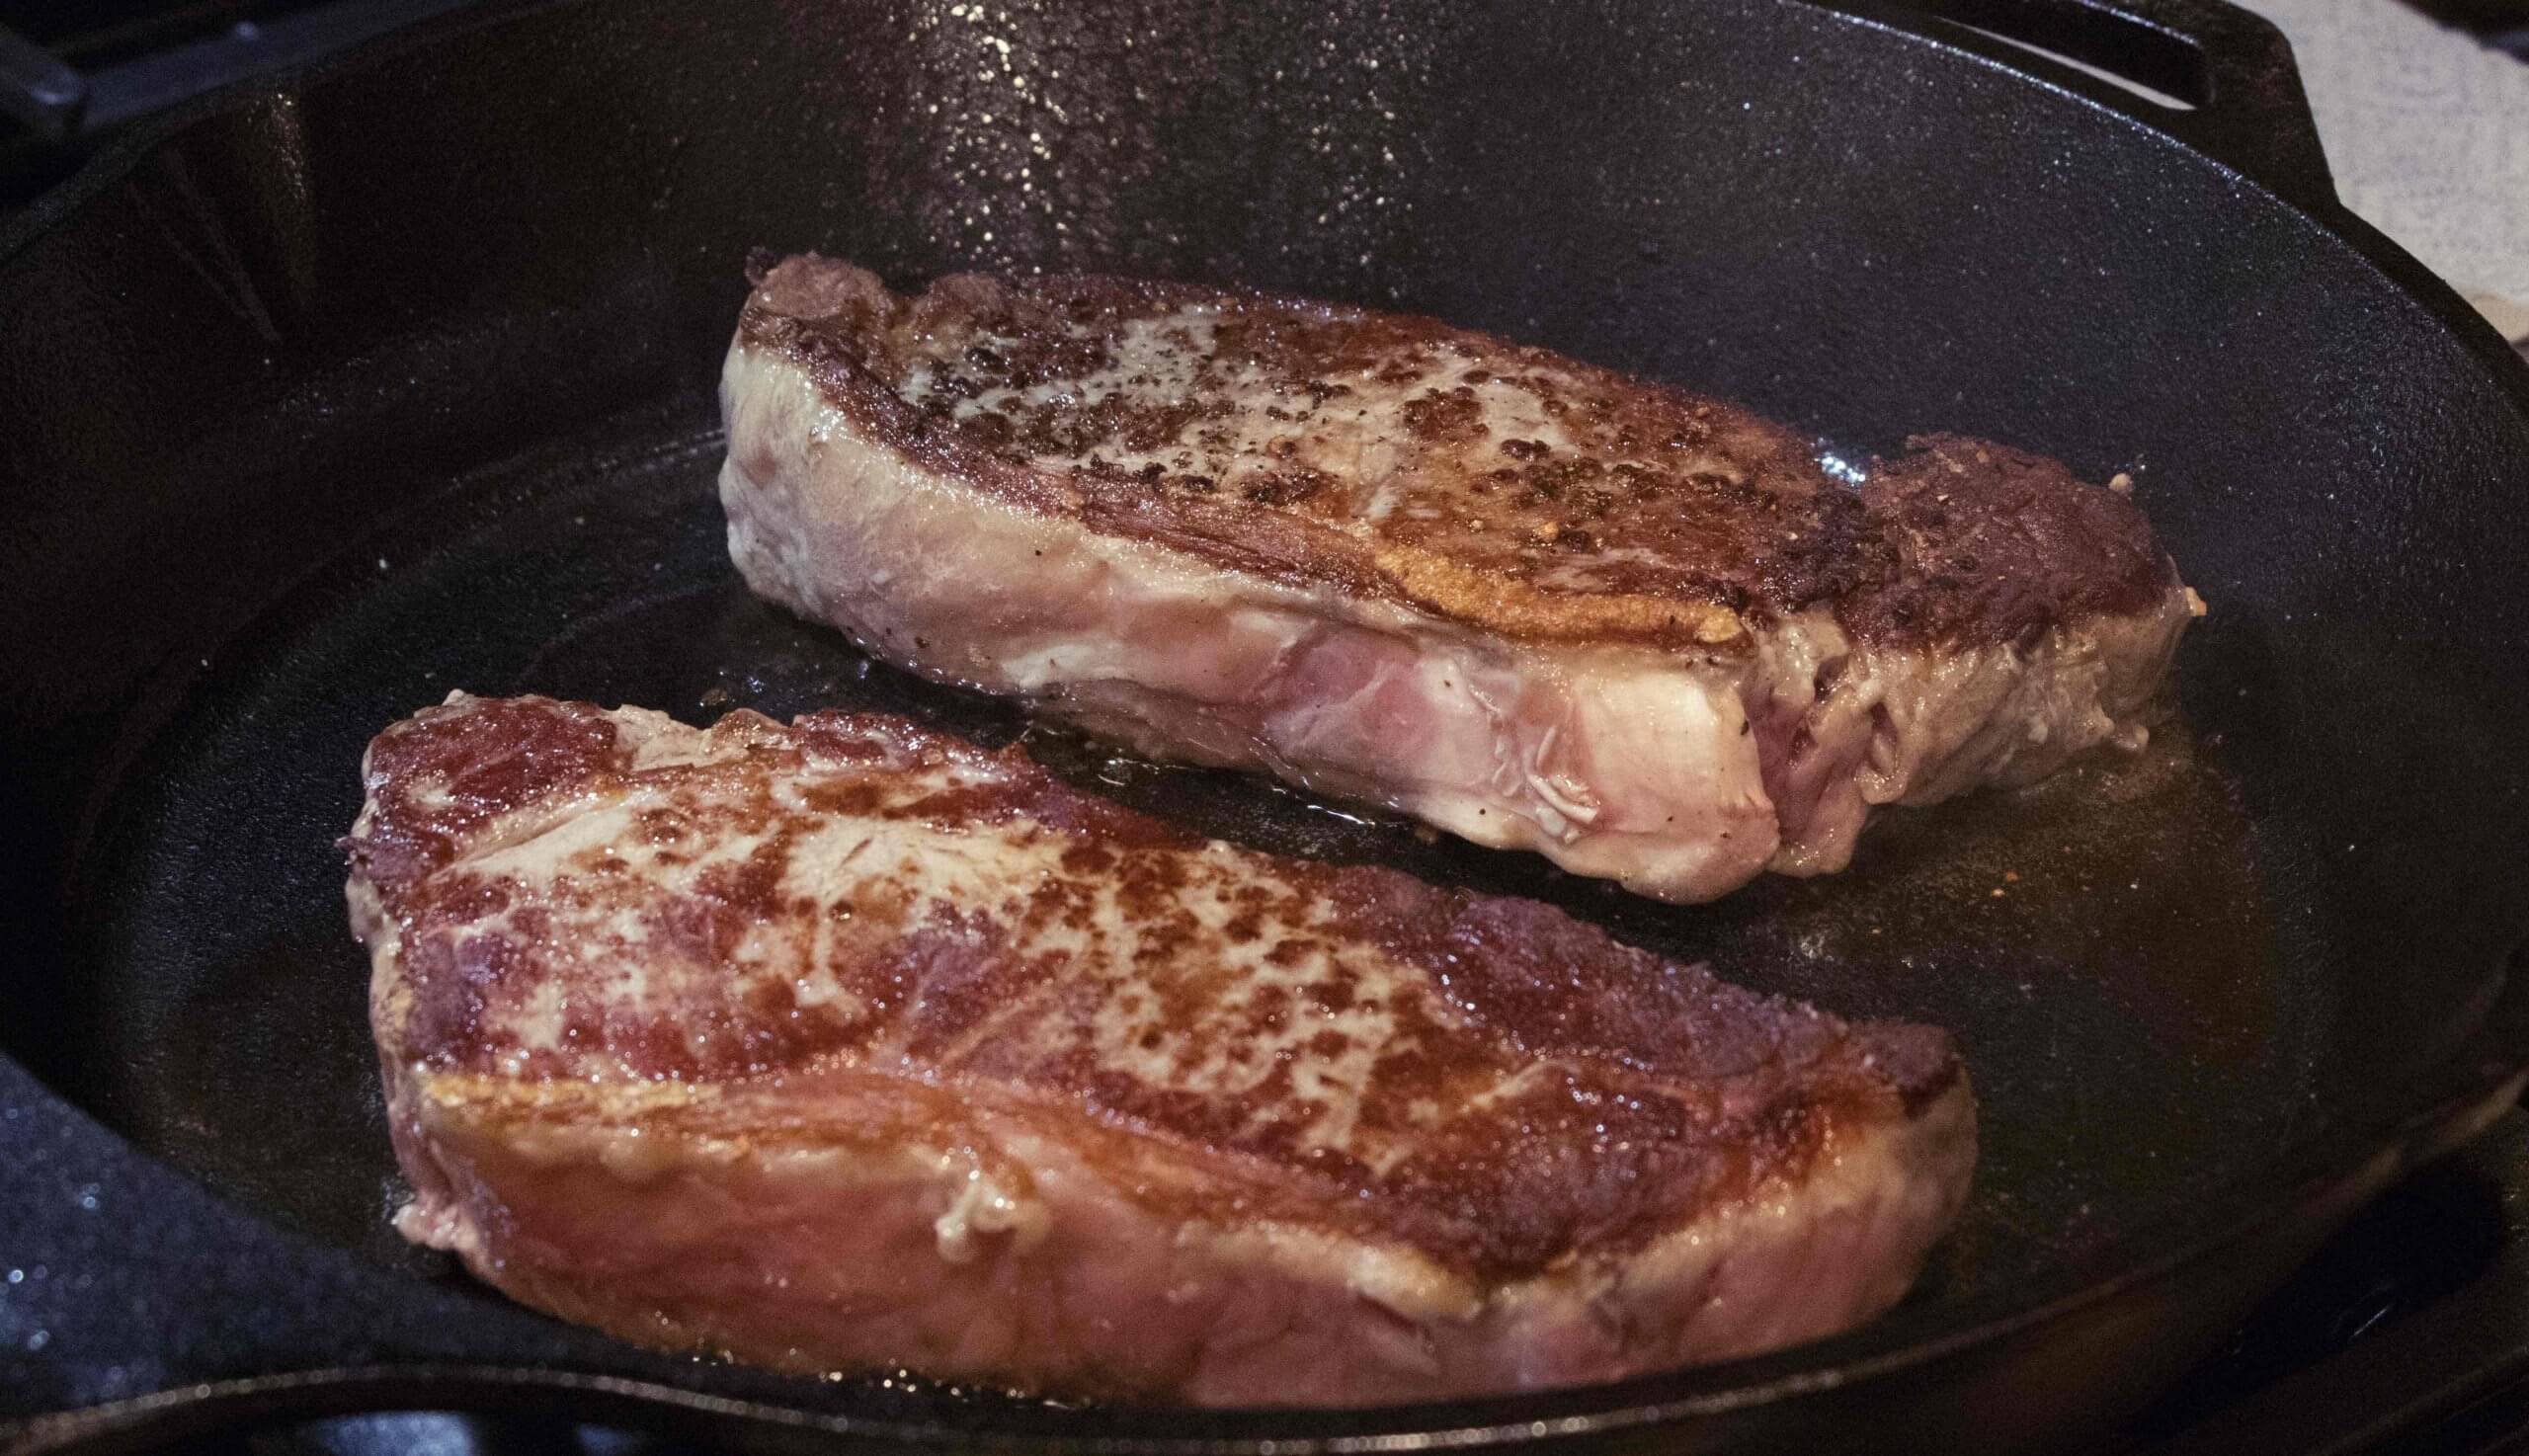 https://www.mychicagosteak.com/steak-university/wp-content/uploads/2020/12/Pan-Fried-Steak-scaled.jpg